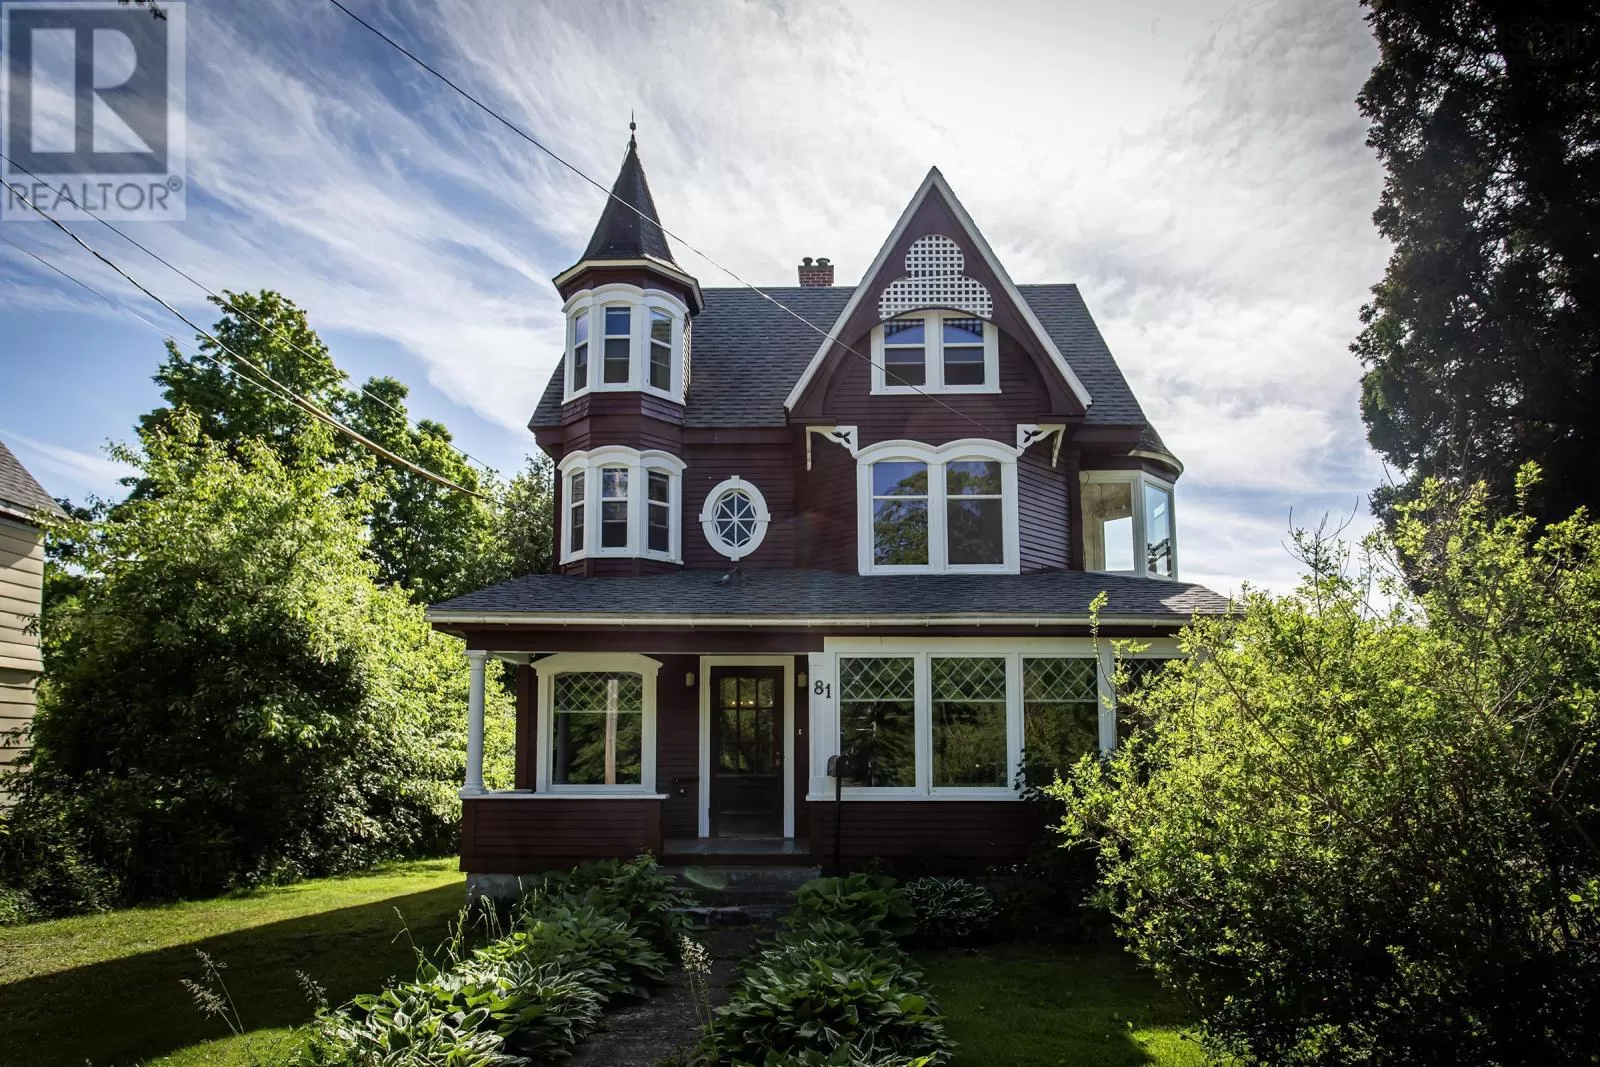 House for rent: 81 School Street, Middleton, Nova Scotia B0S 1P0